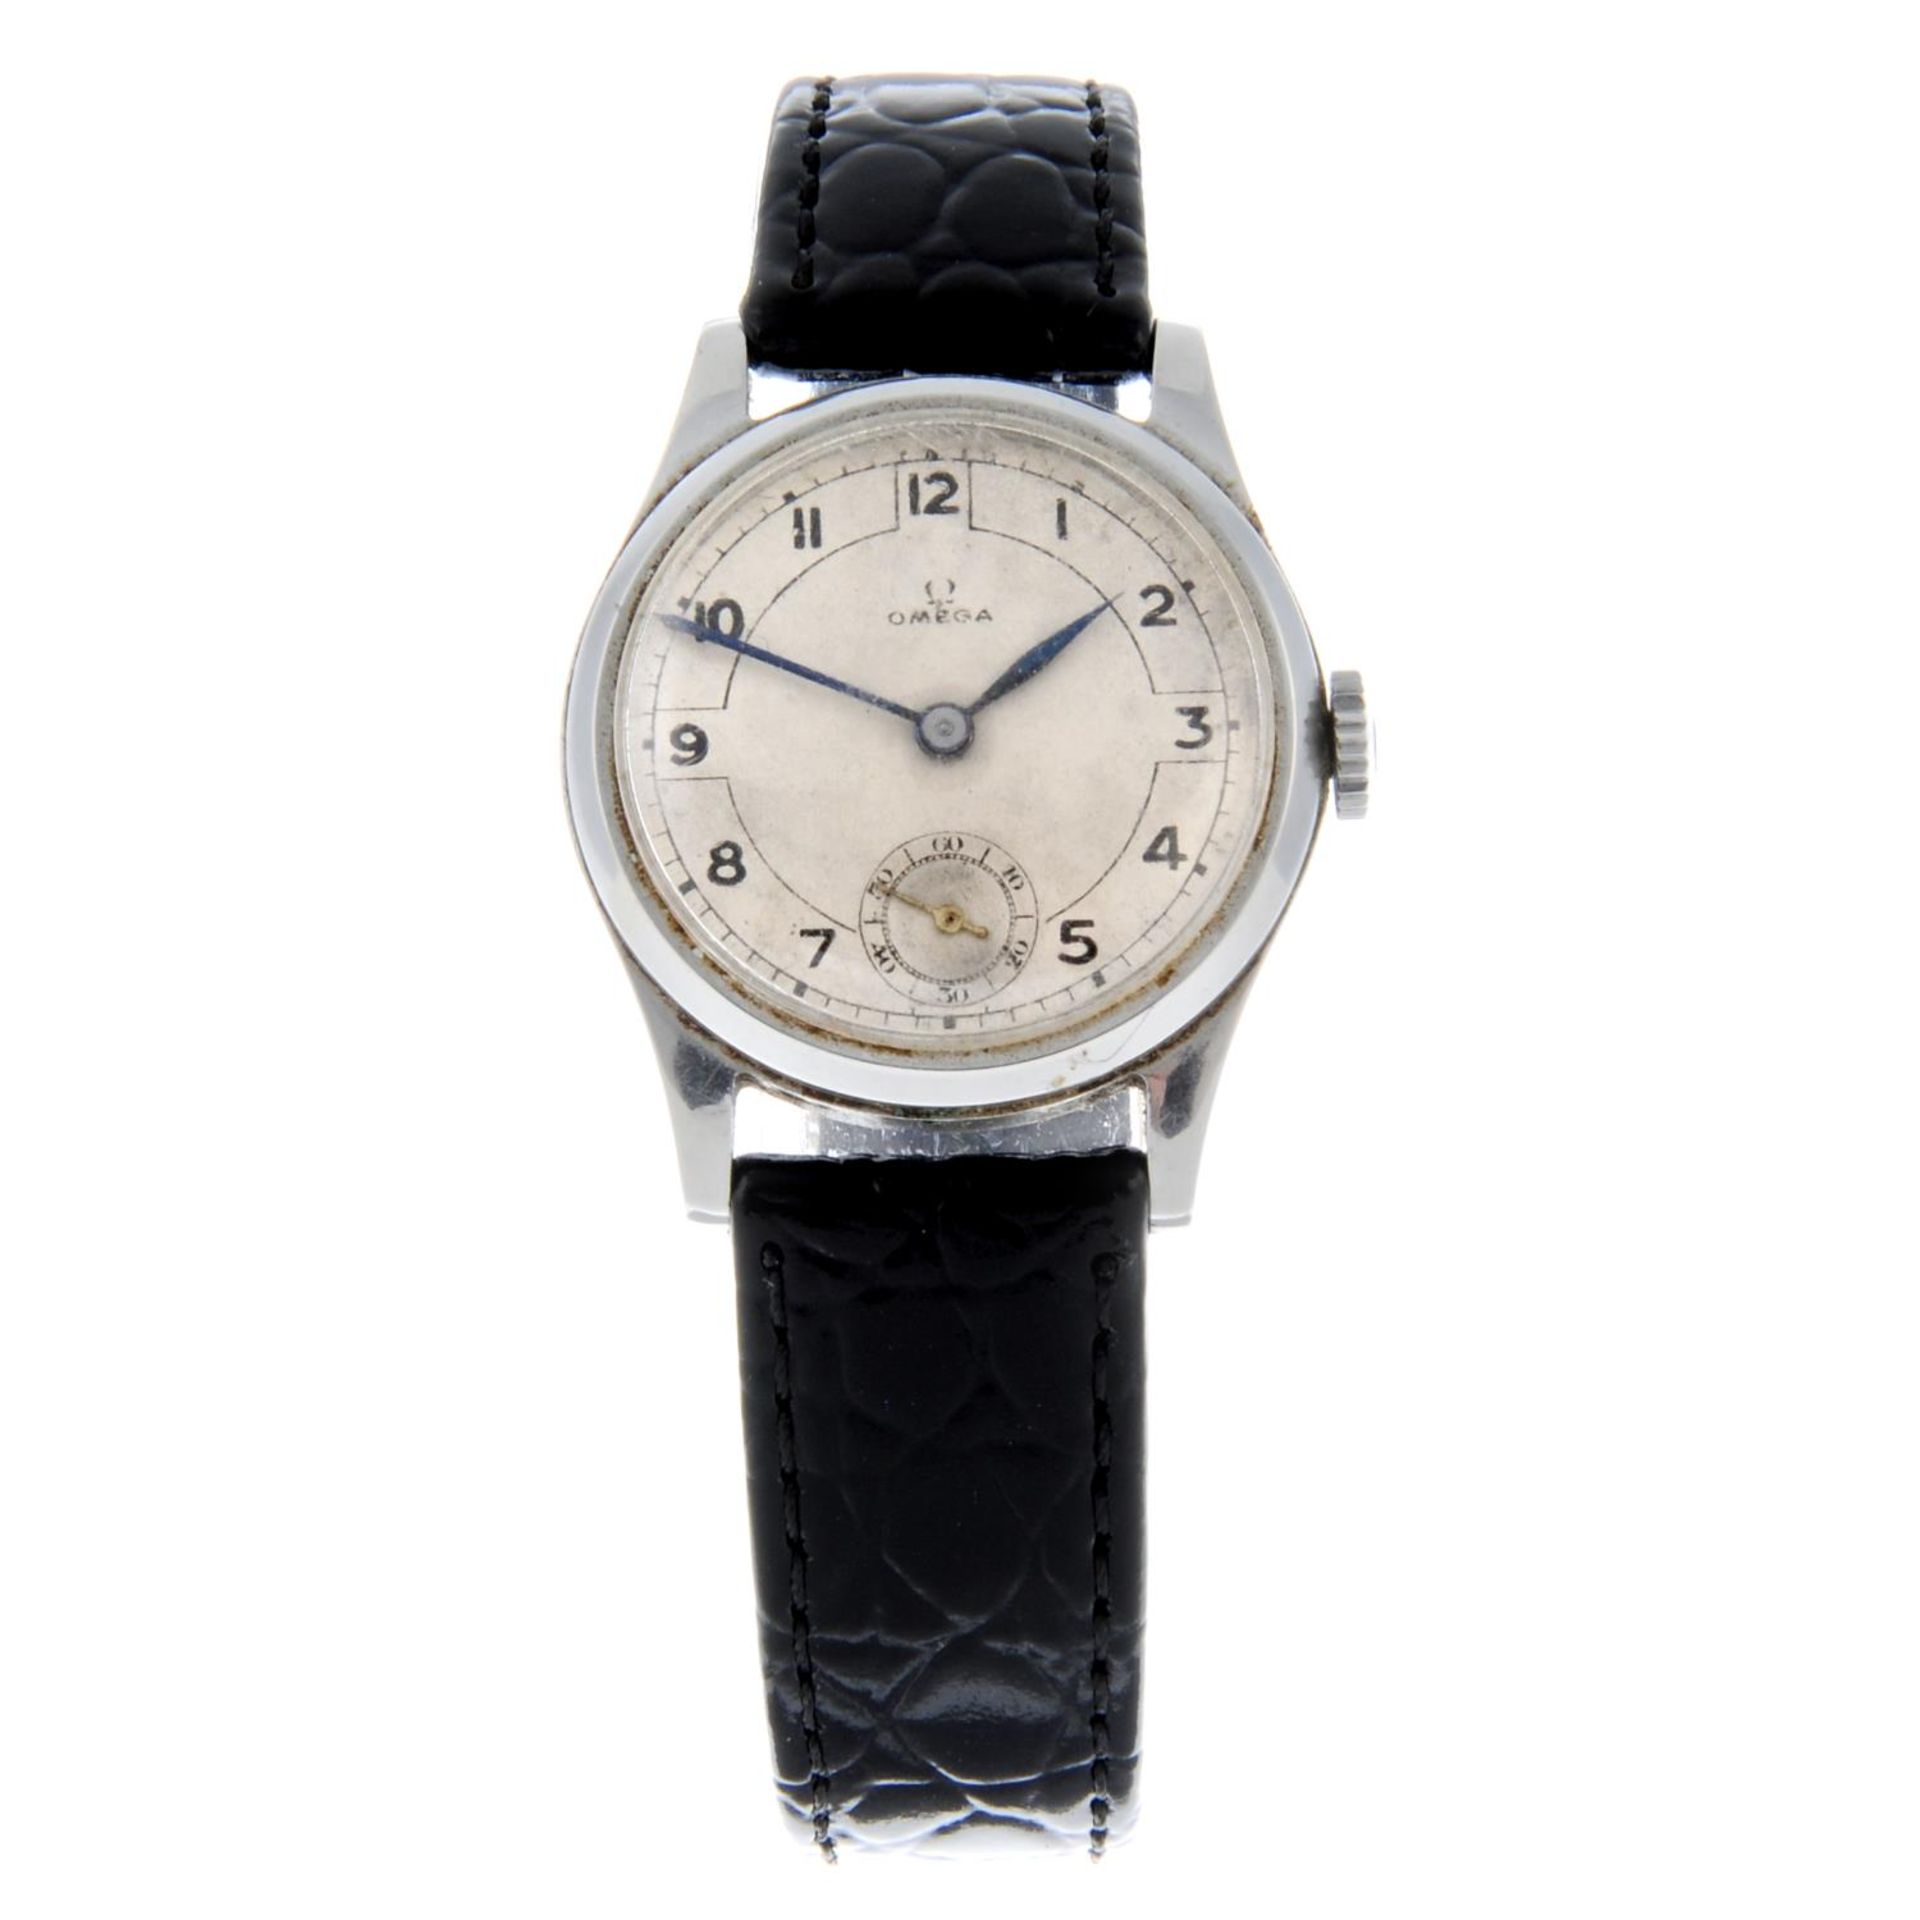 OMEGA - a mid-size wrist watch.